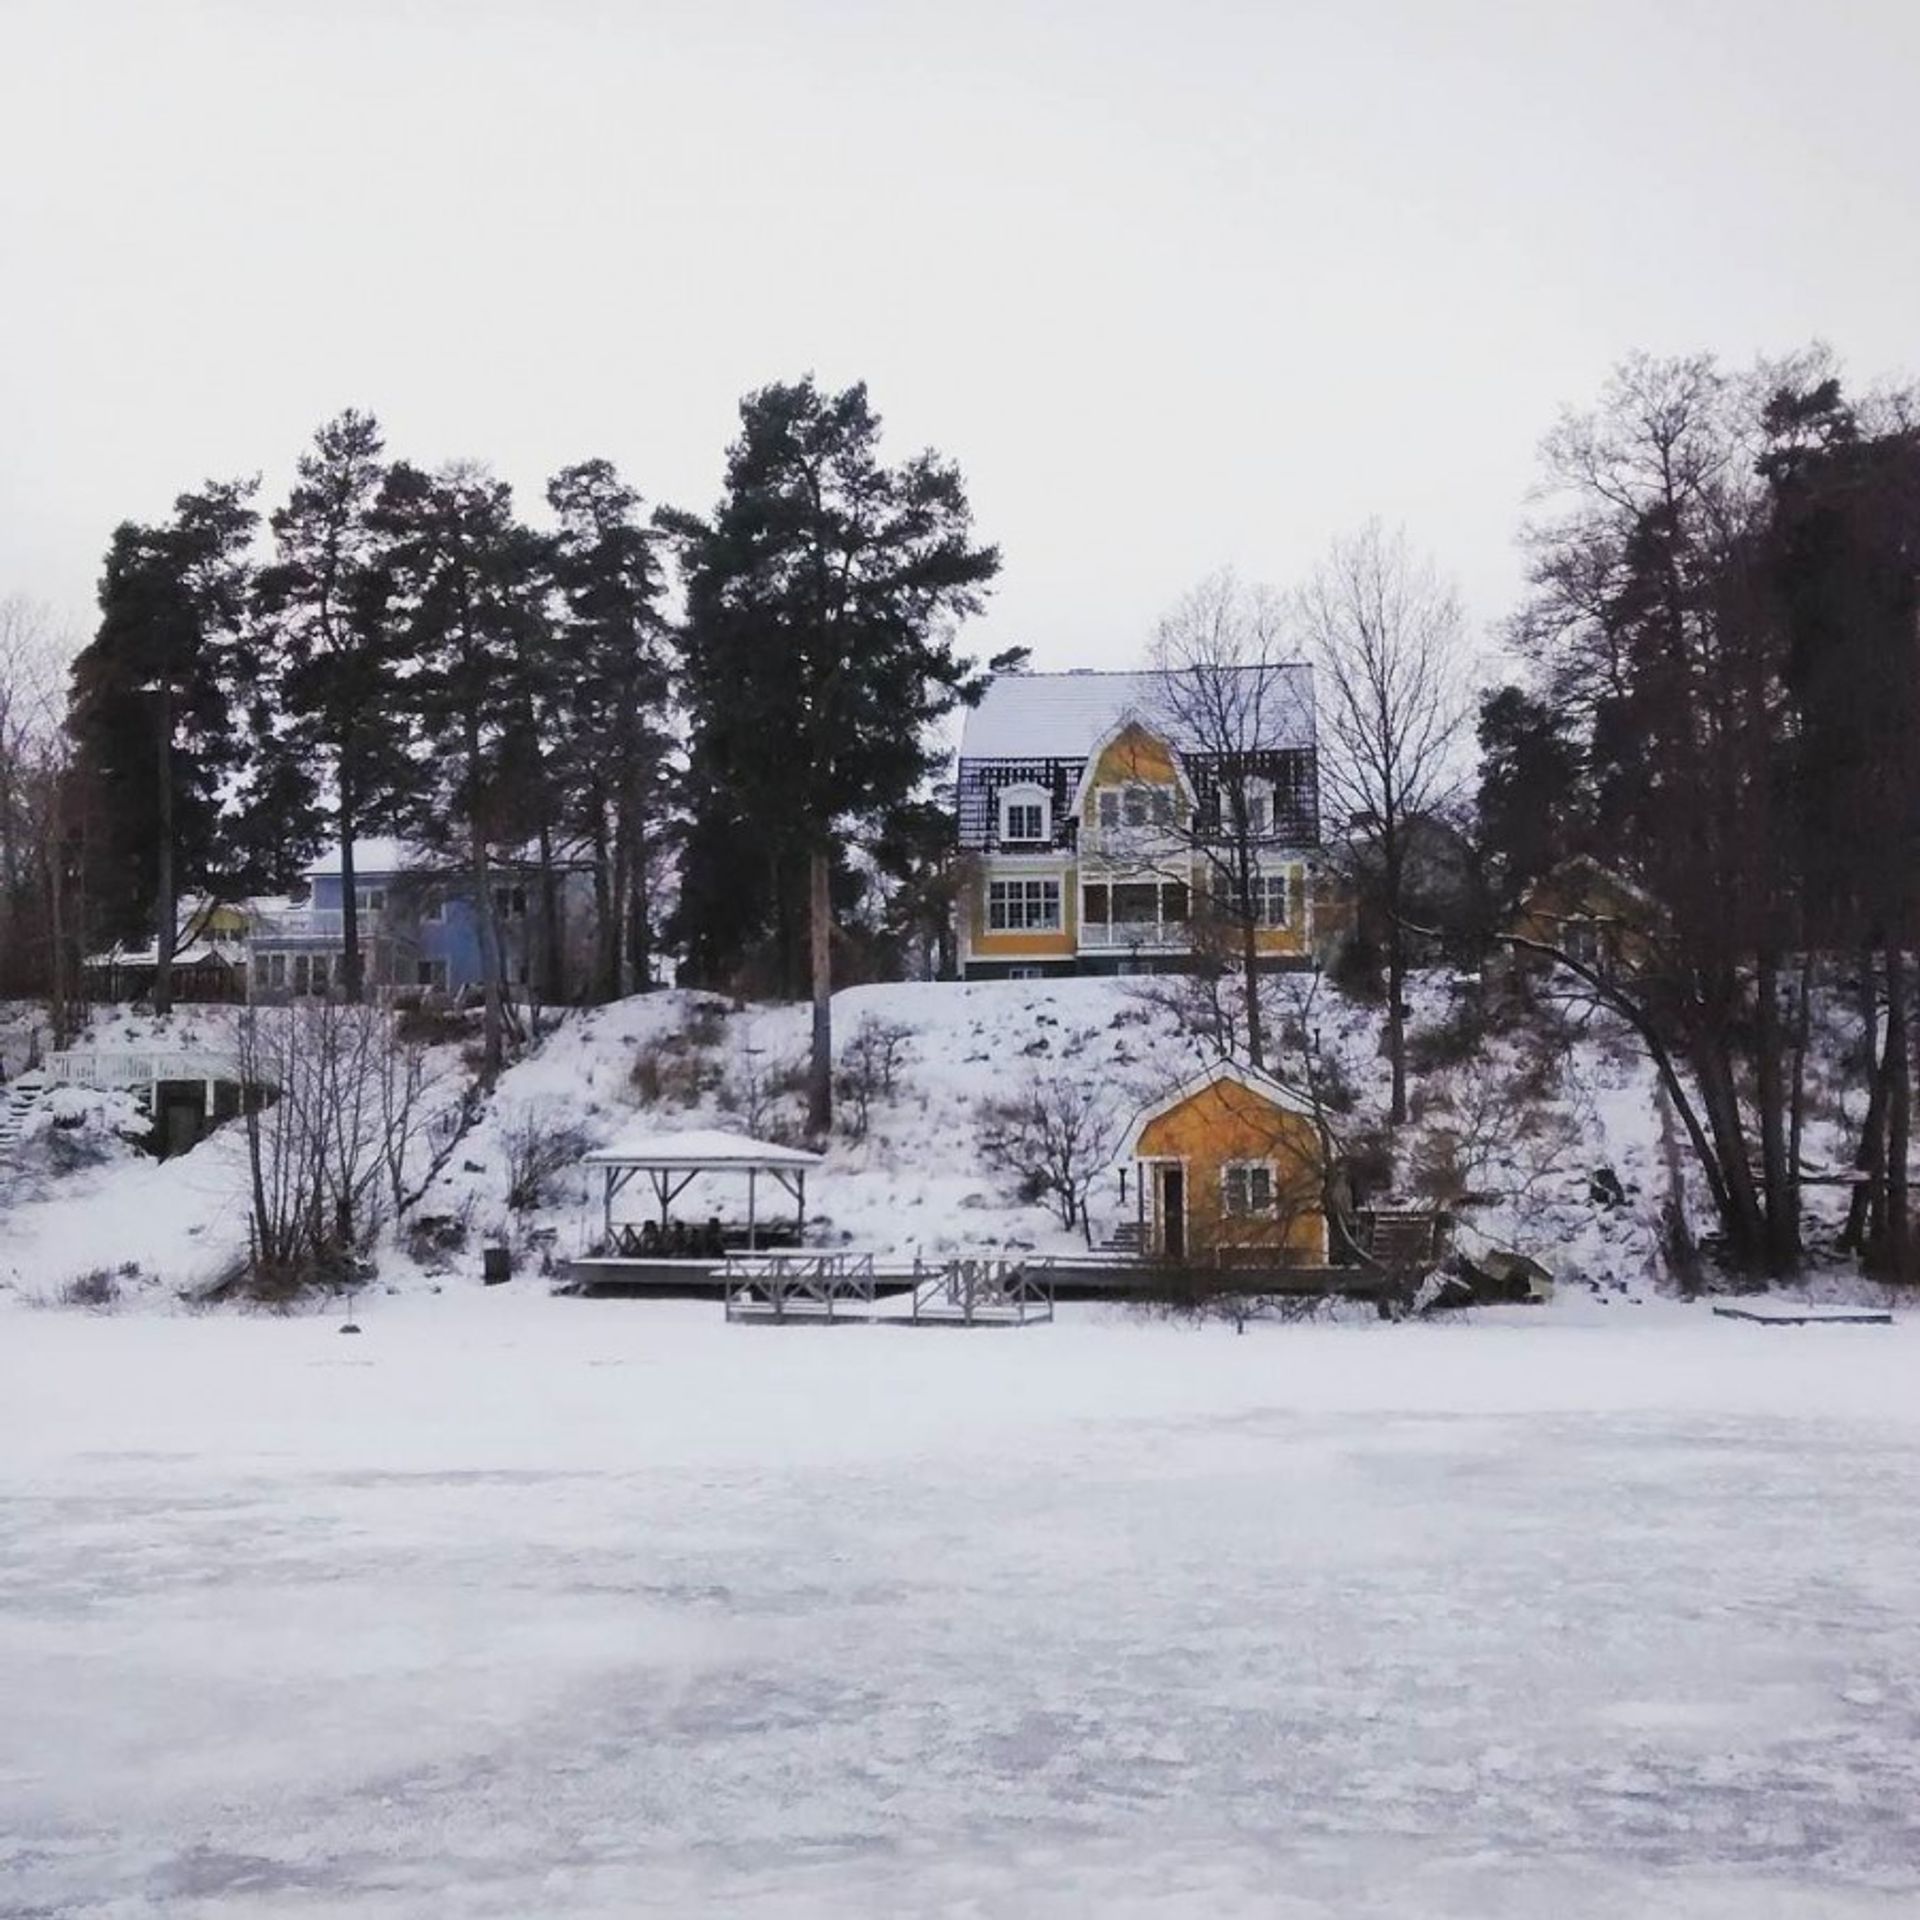 A house by the lake. #winterwonderland